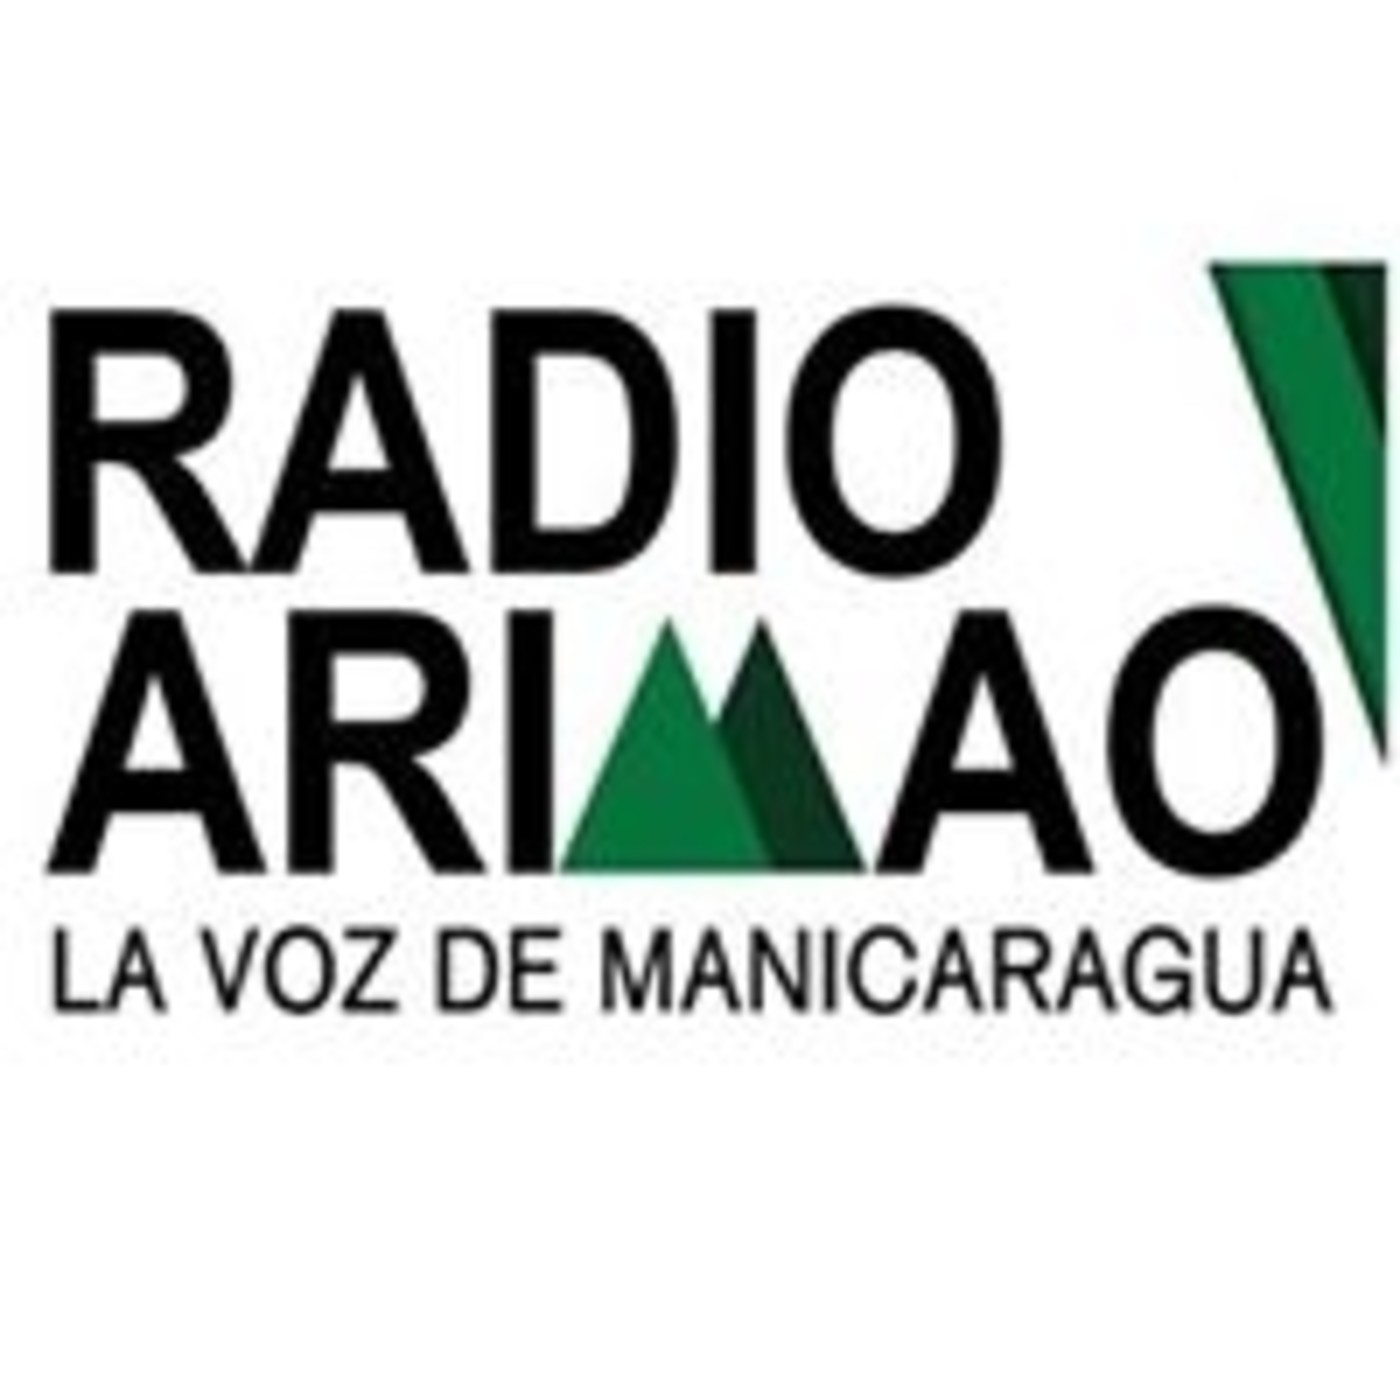 Radio Arimao,la voz de Manicaragua.